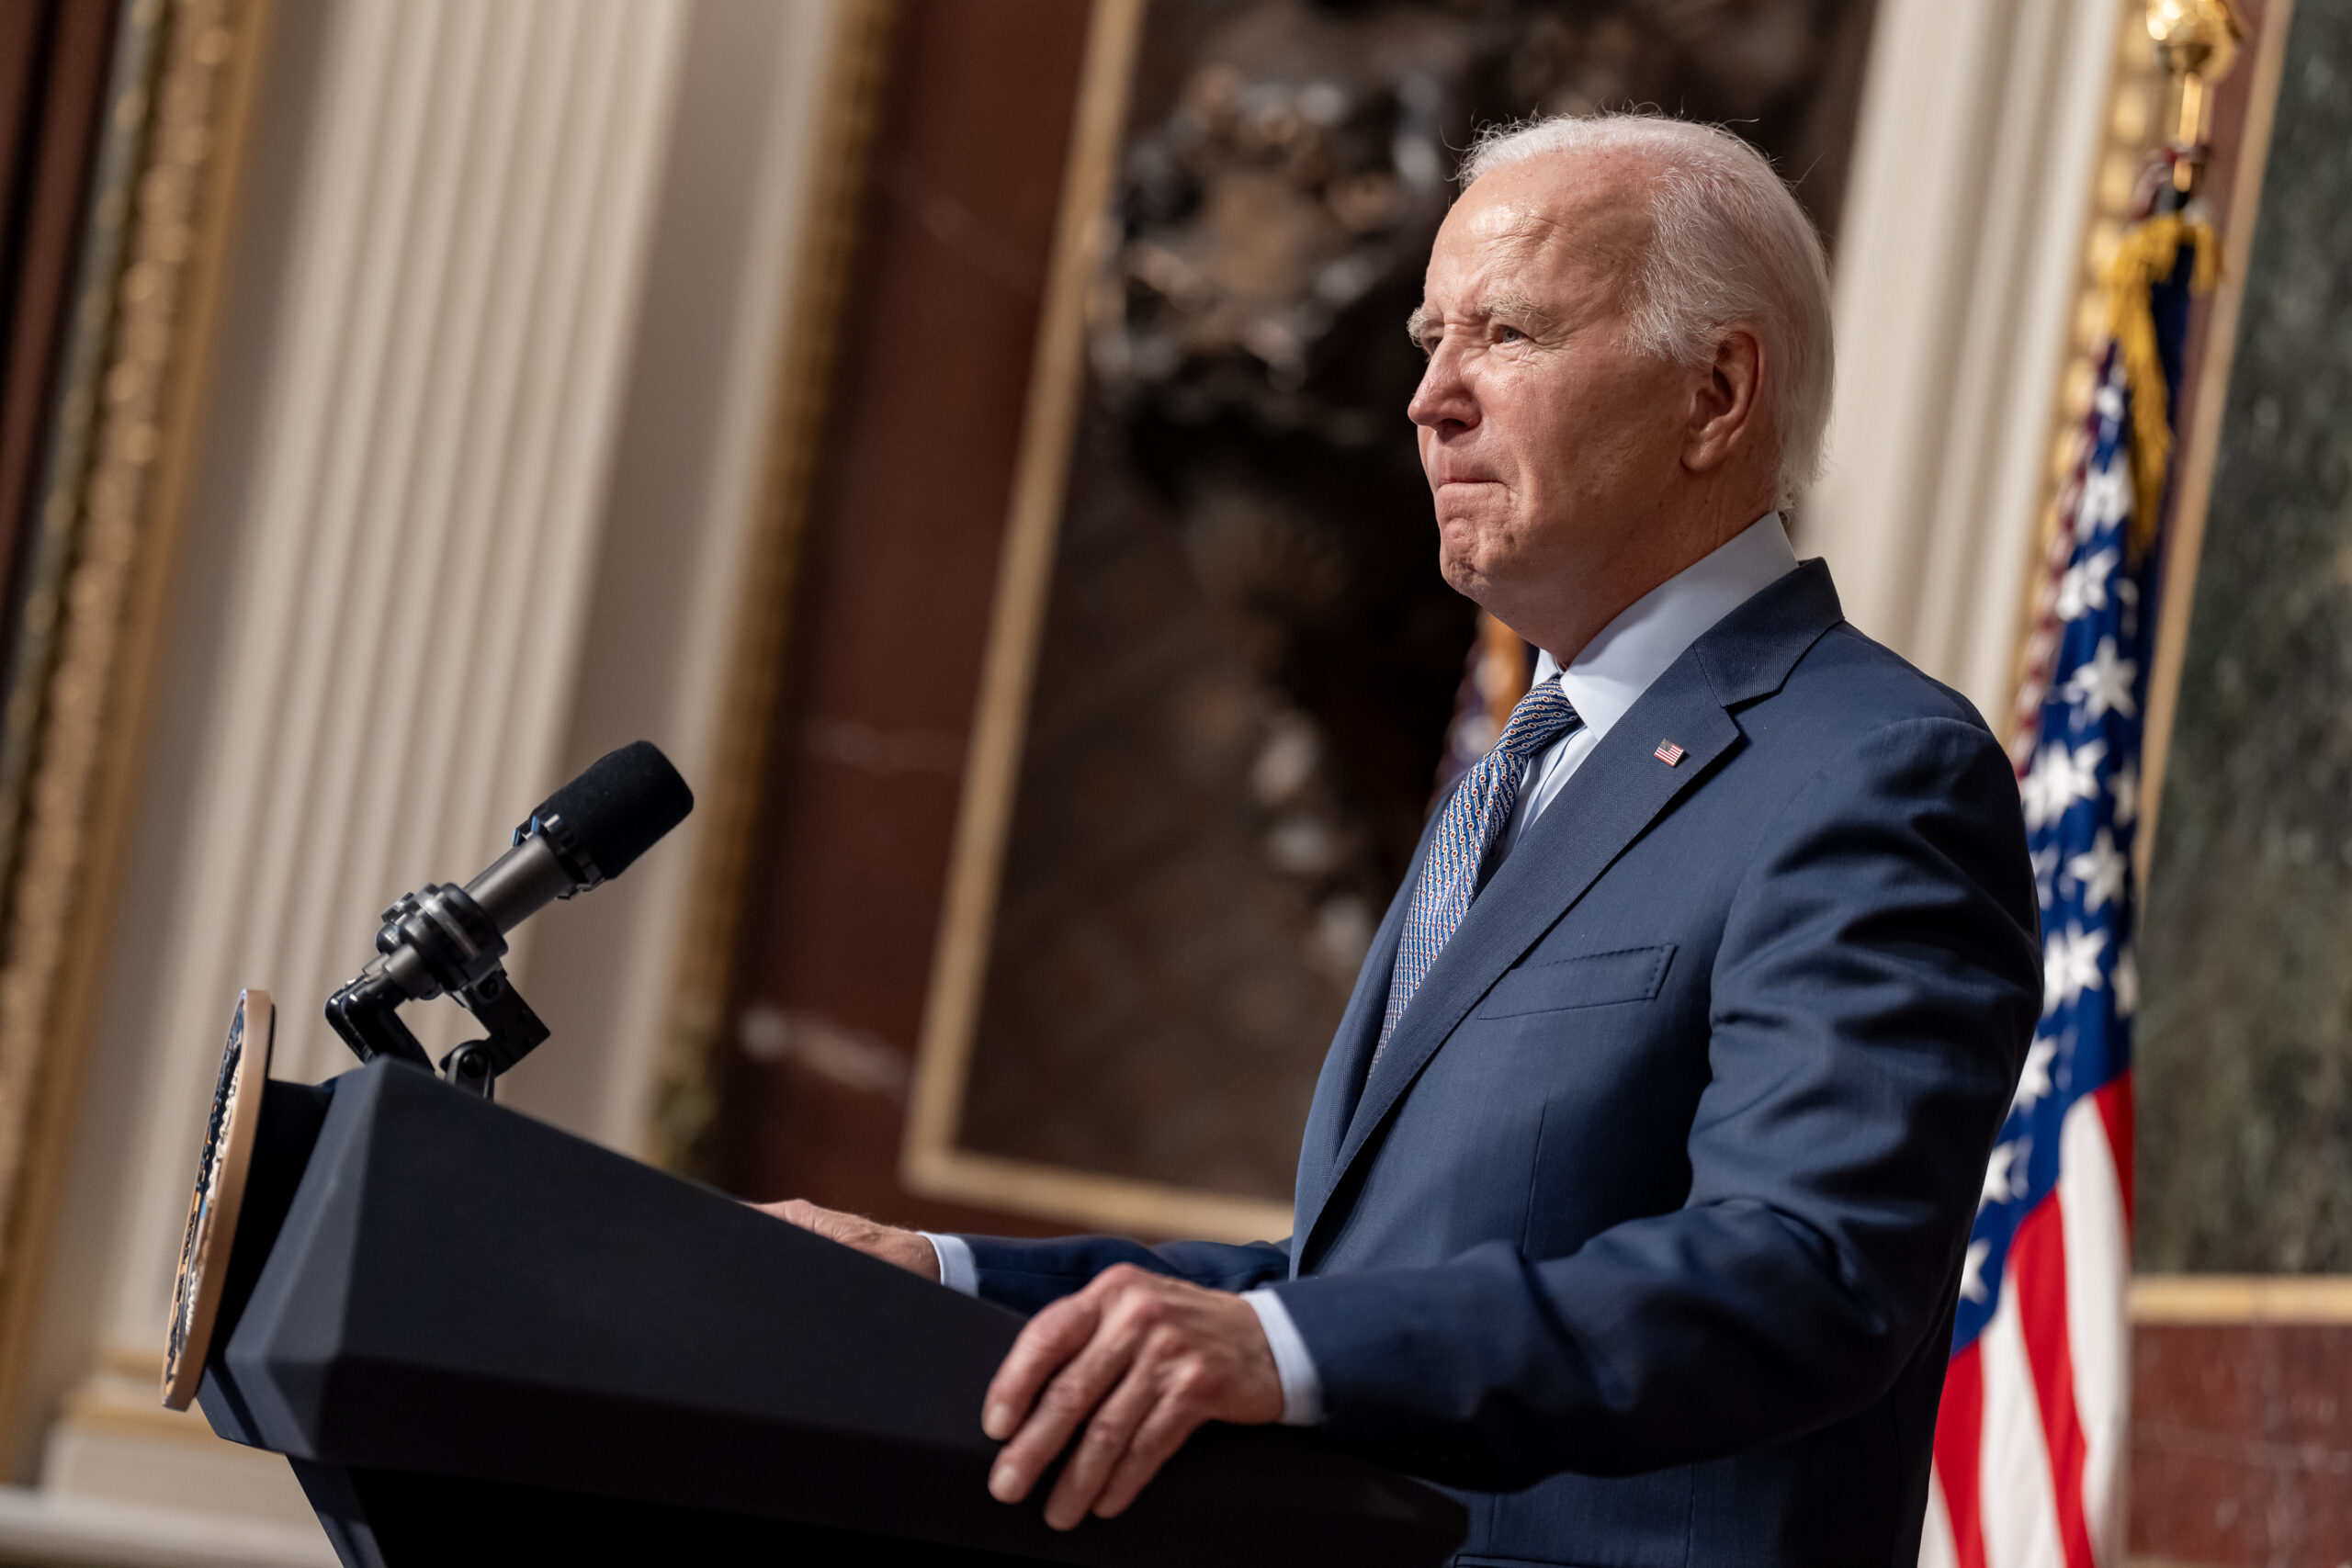 Biden’s associate denies involvement despite FBI statement